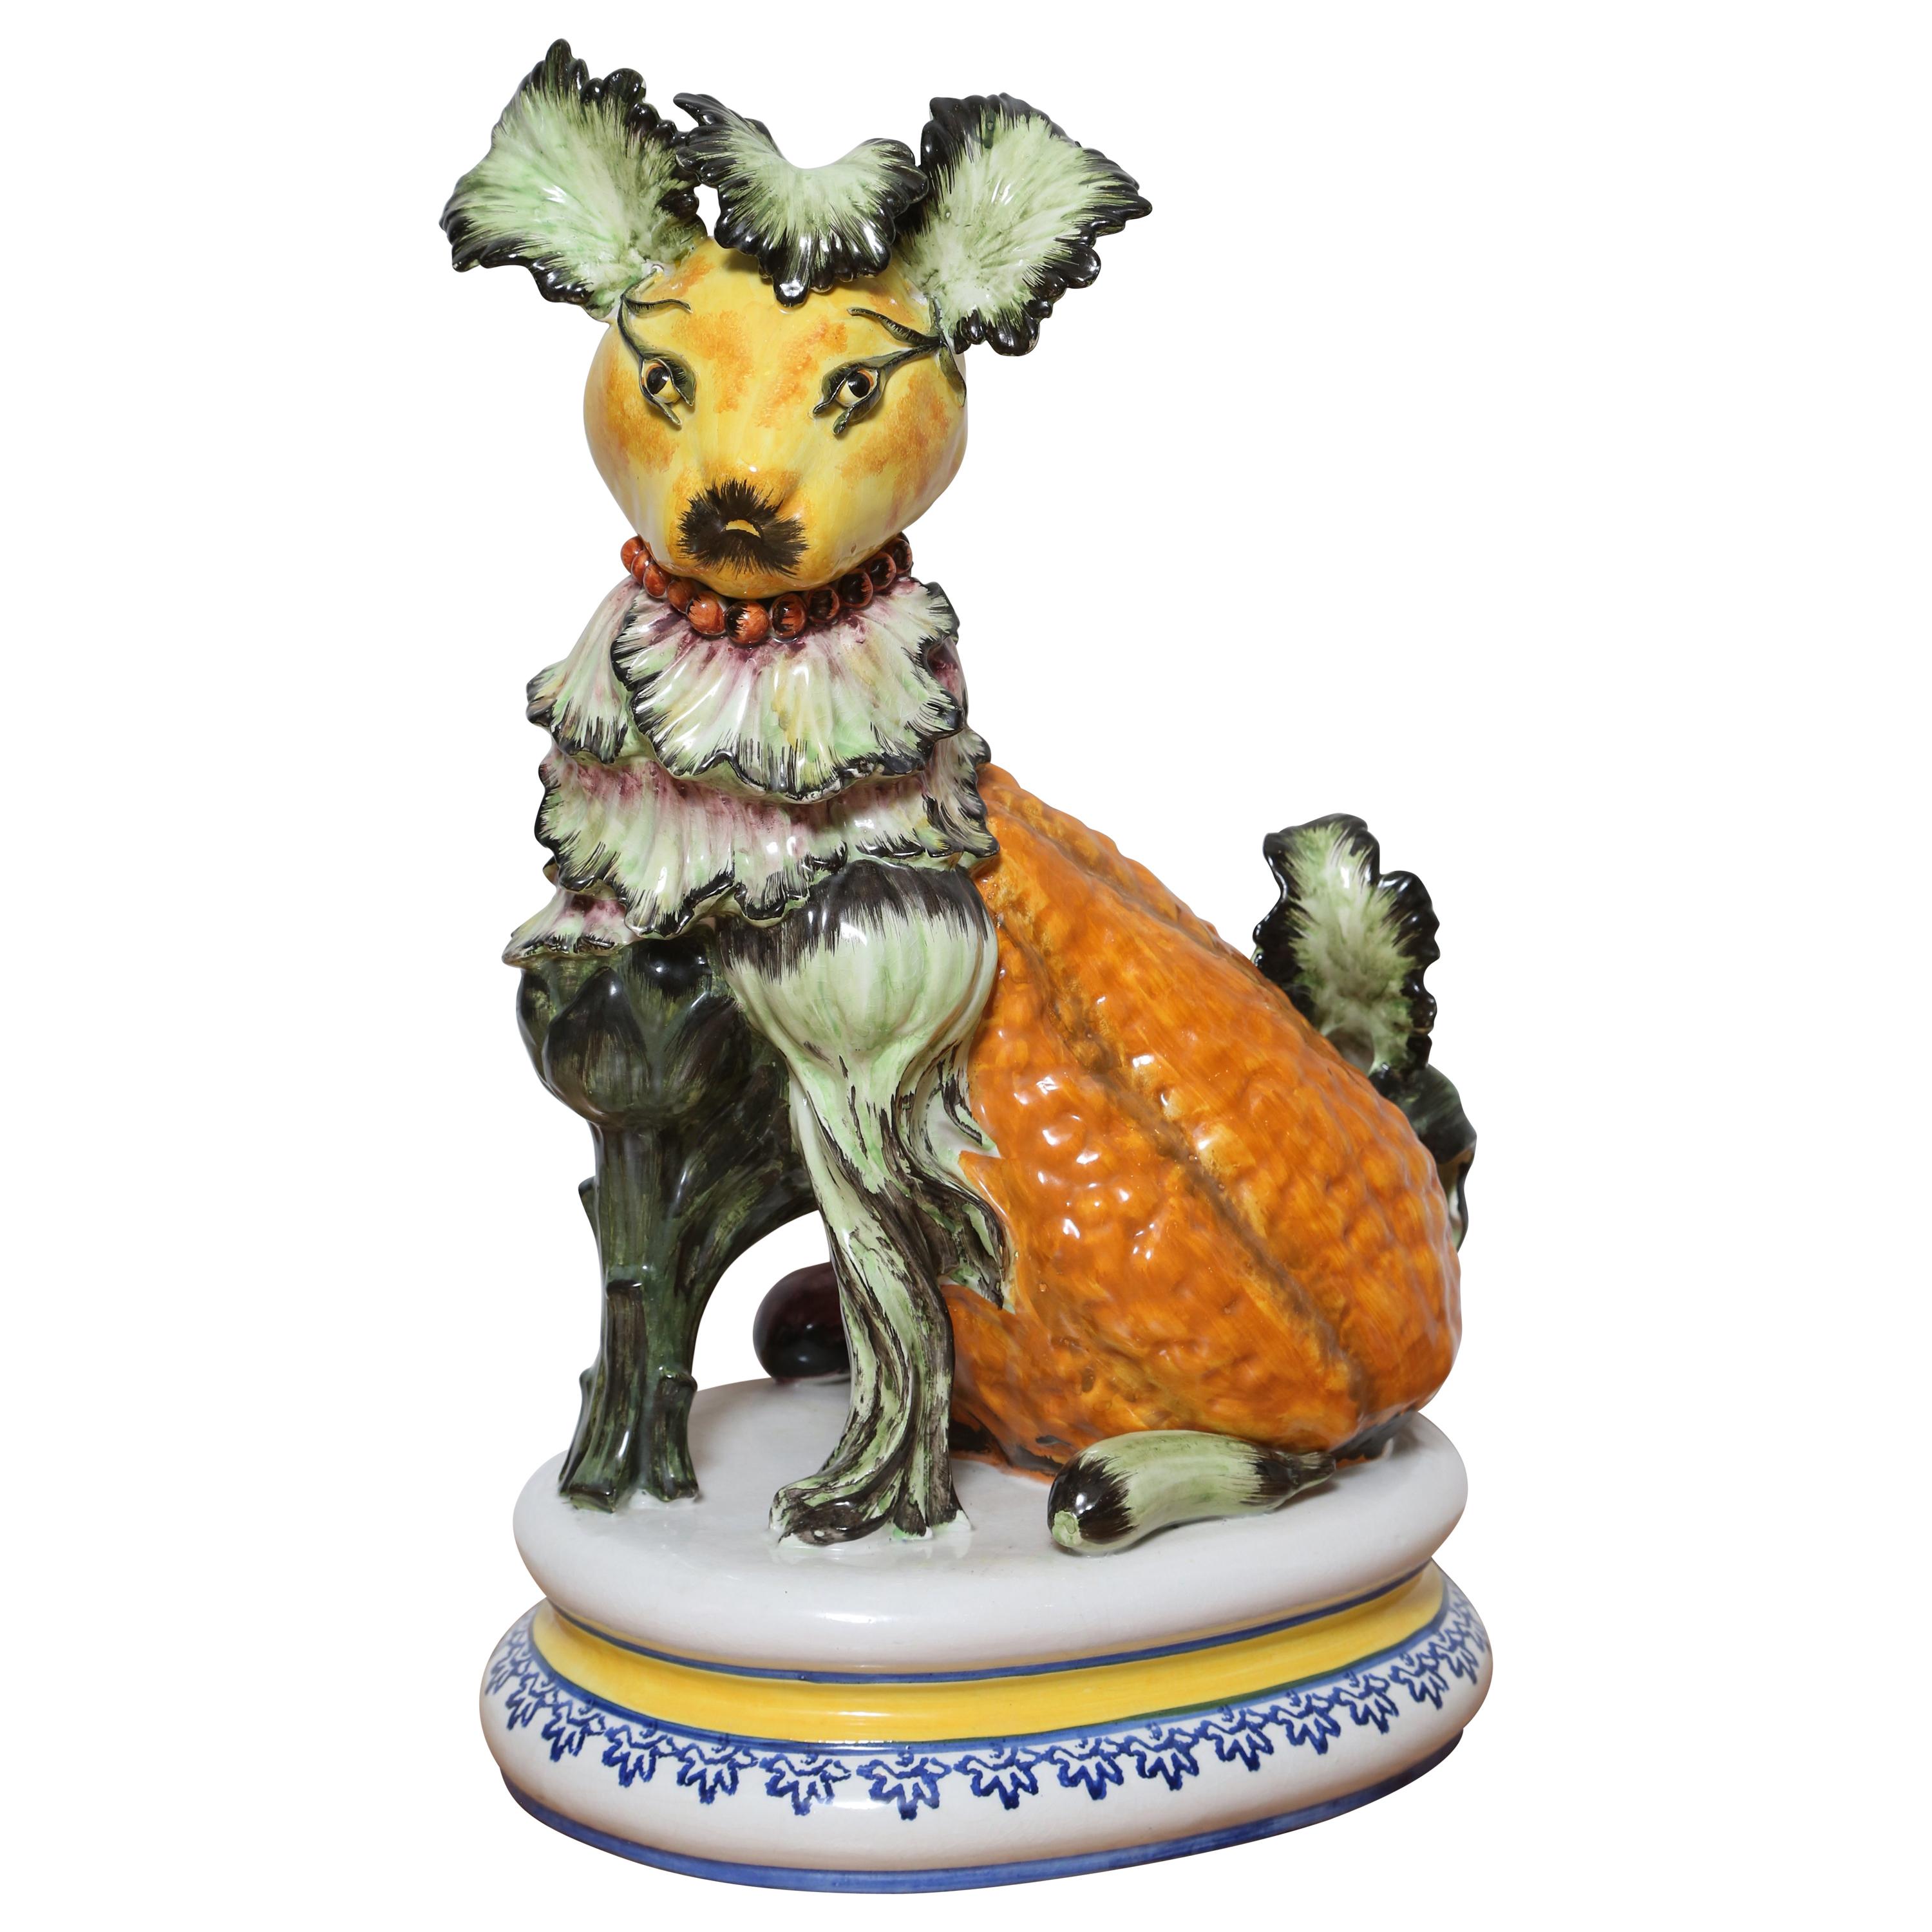 Ceramic "Vegetable" Dog